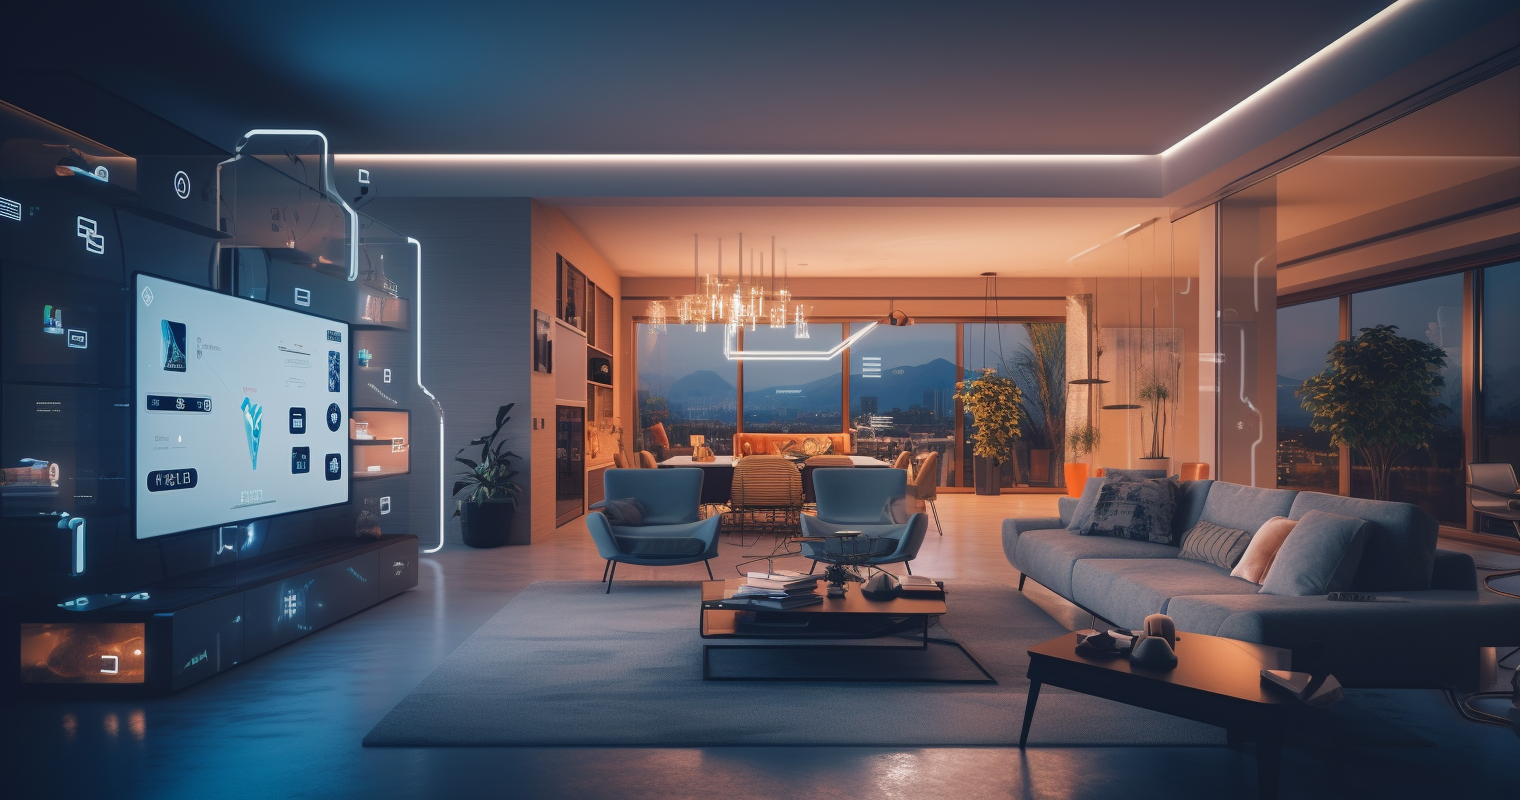 Futuristic smart home environment